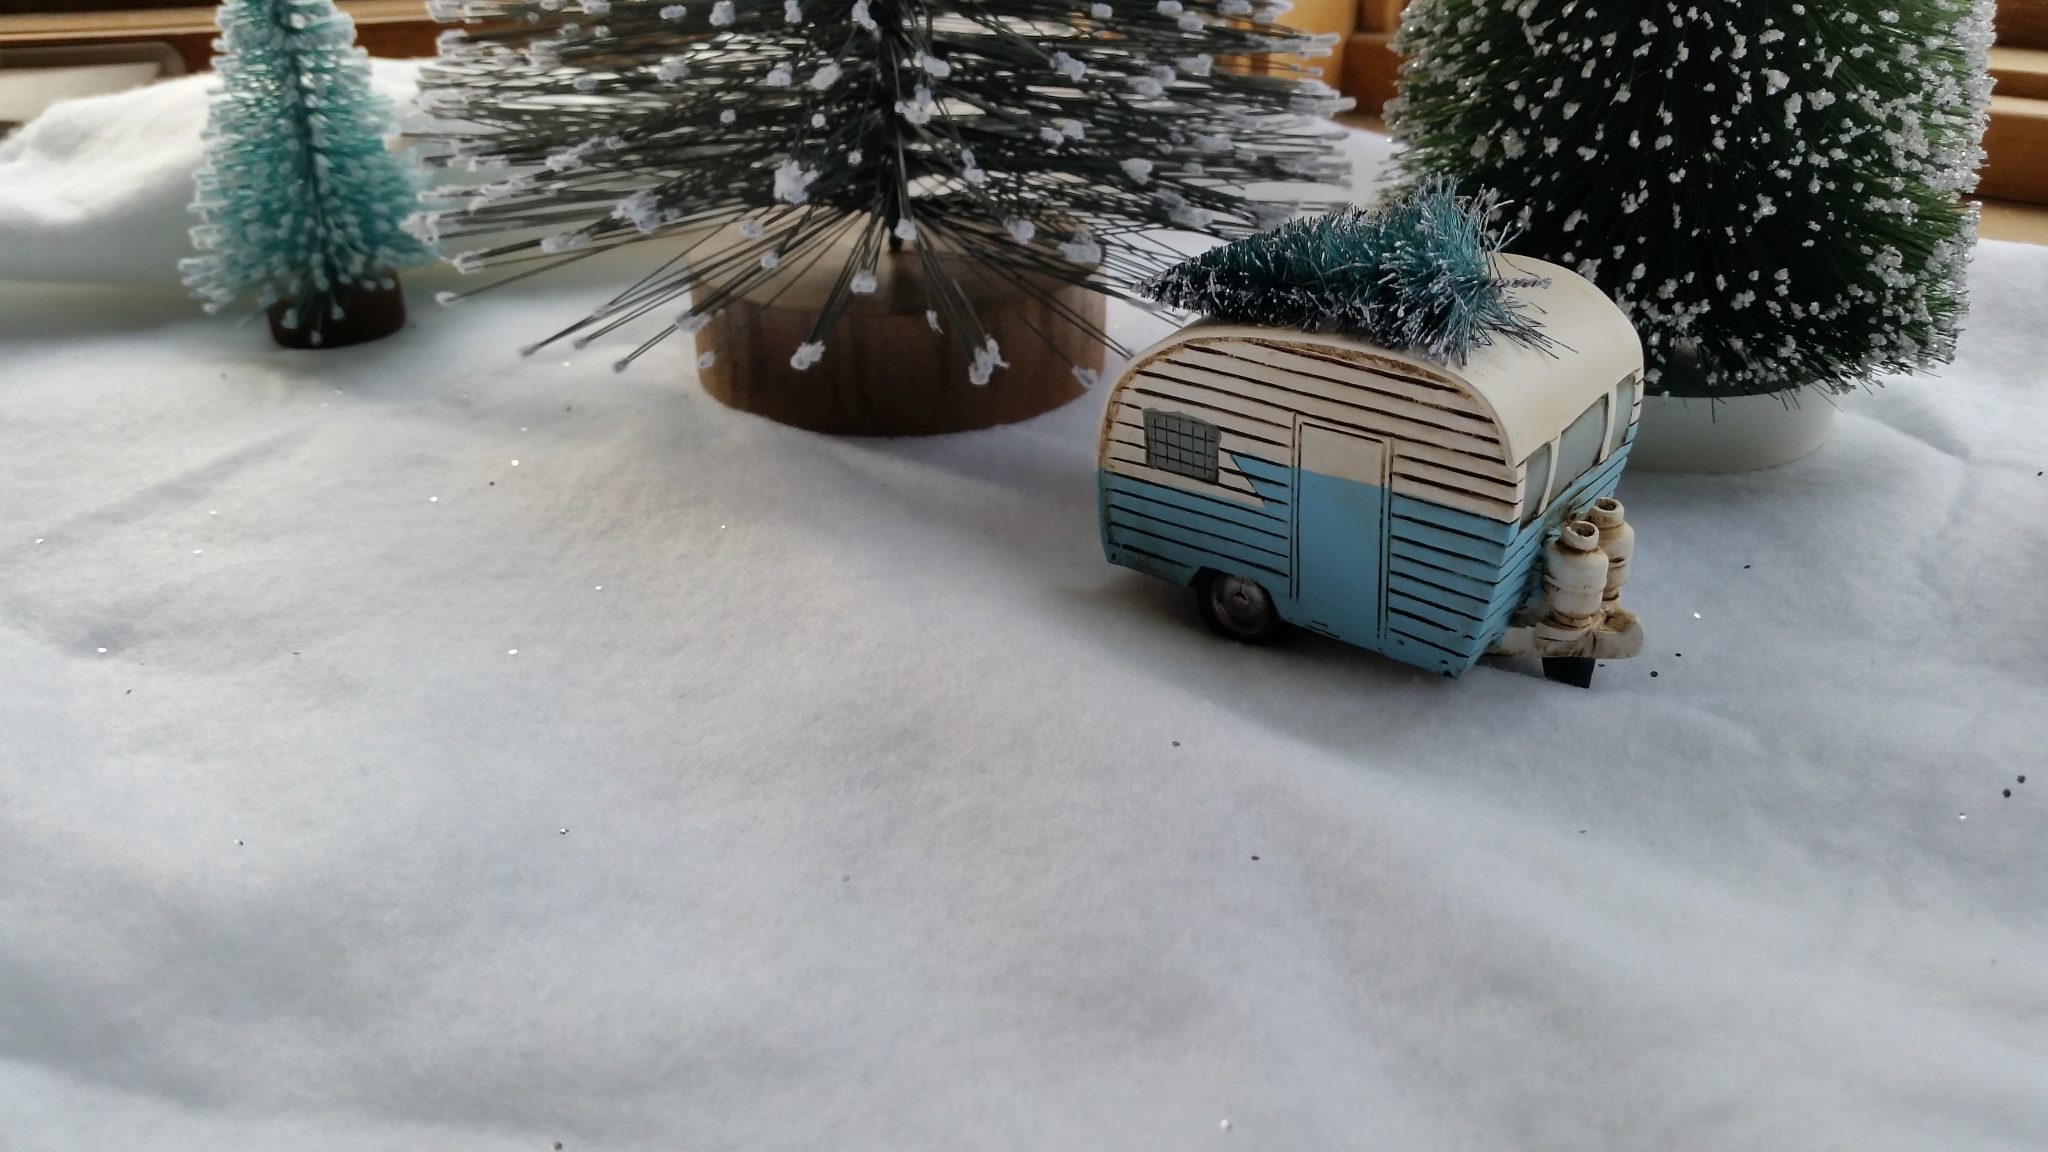 Miniature winter scene